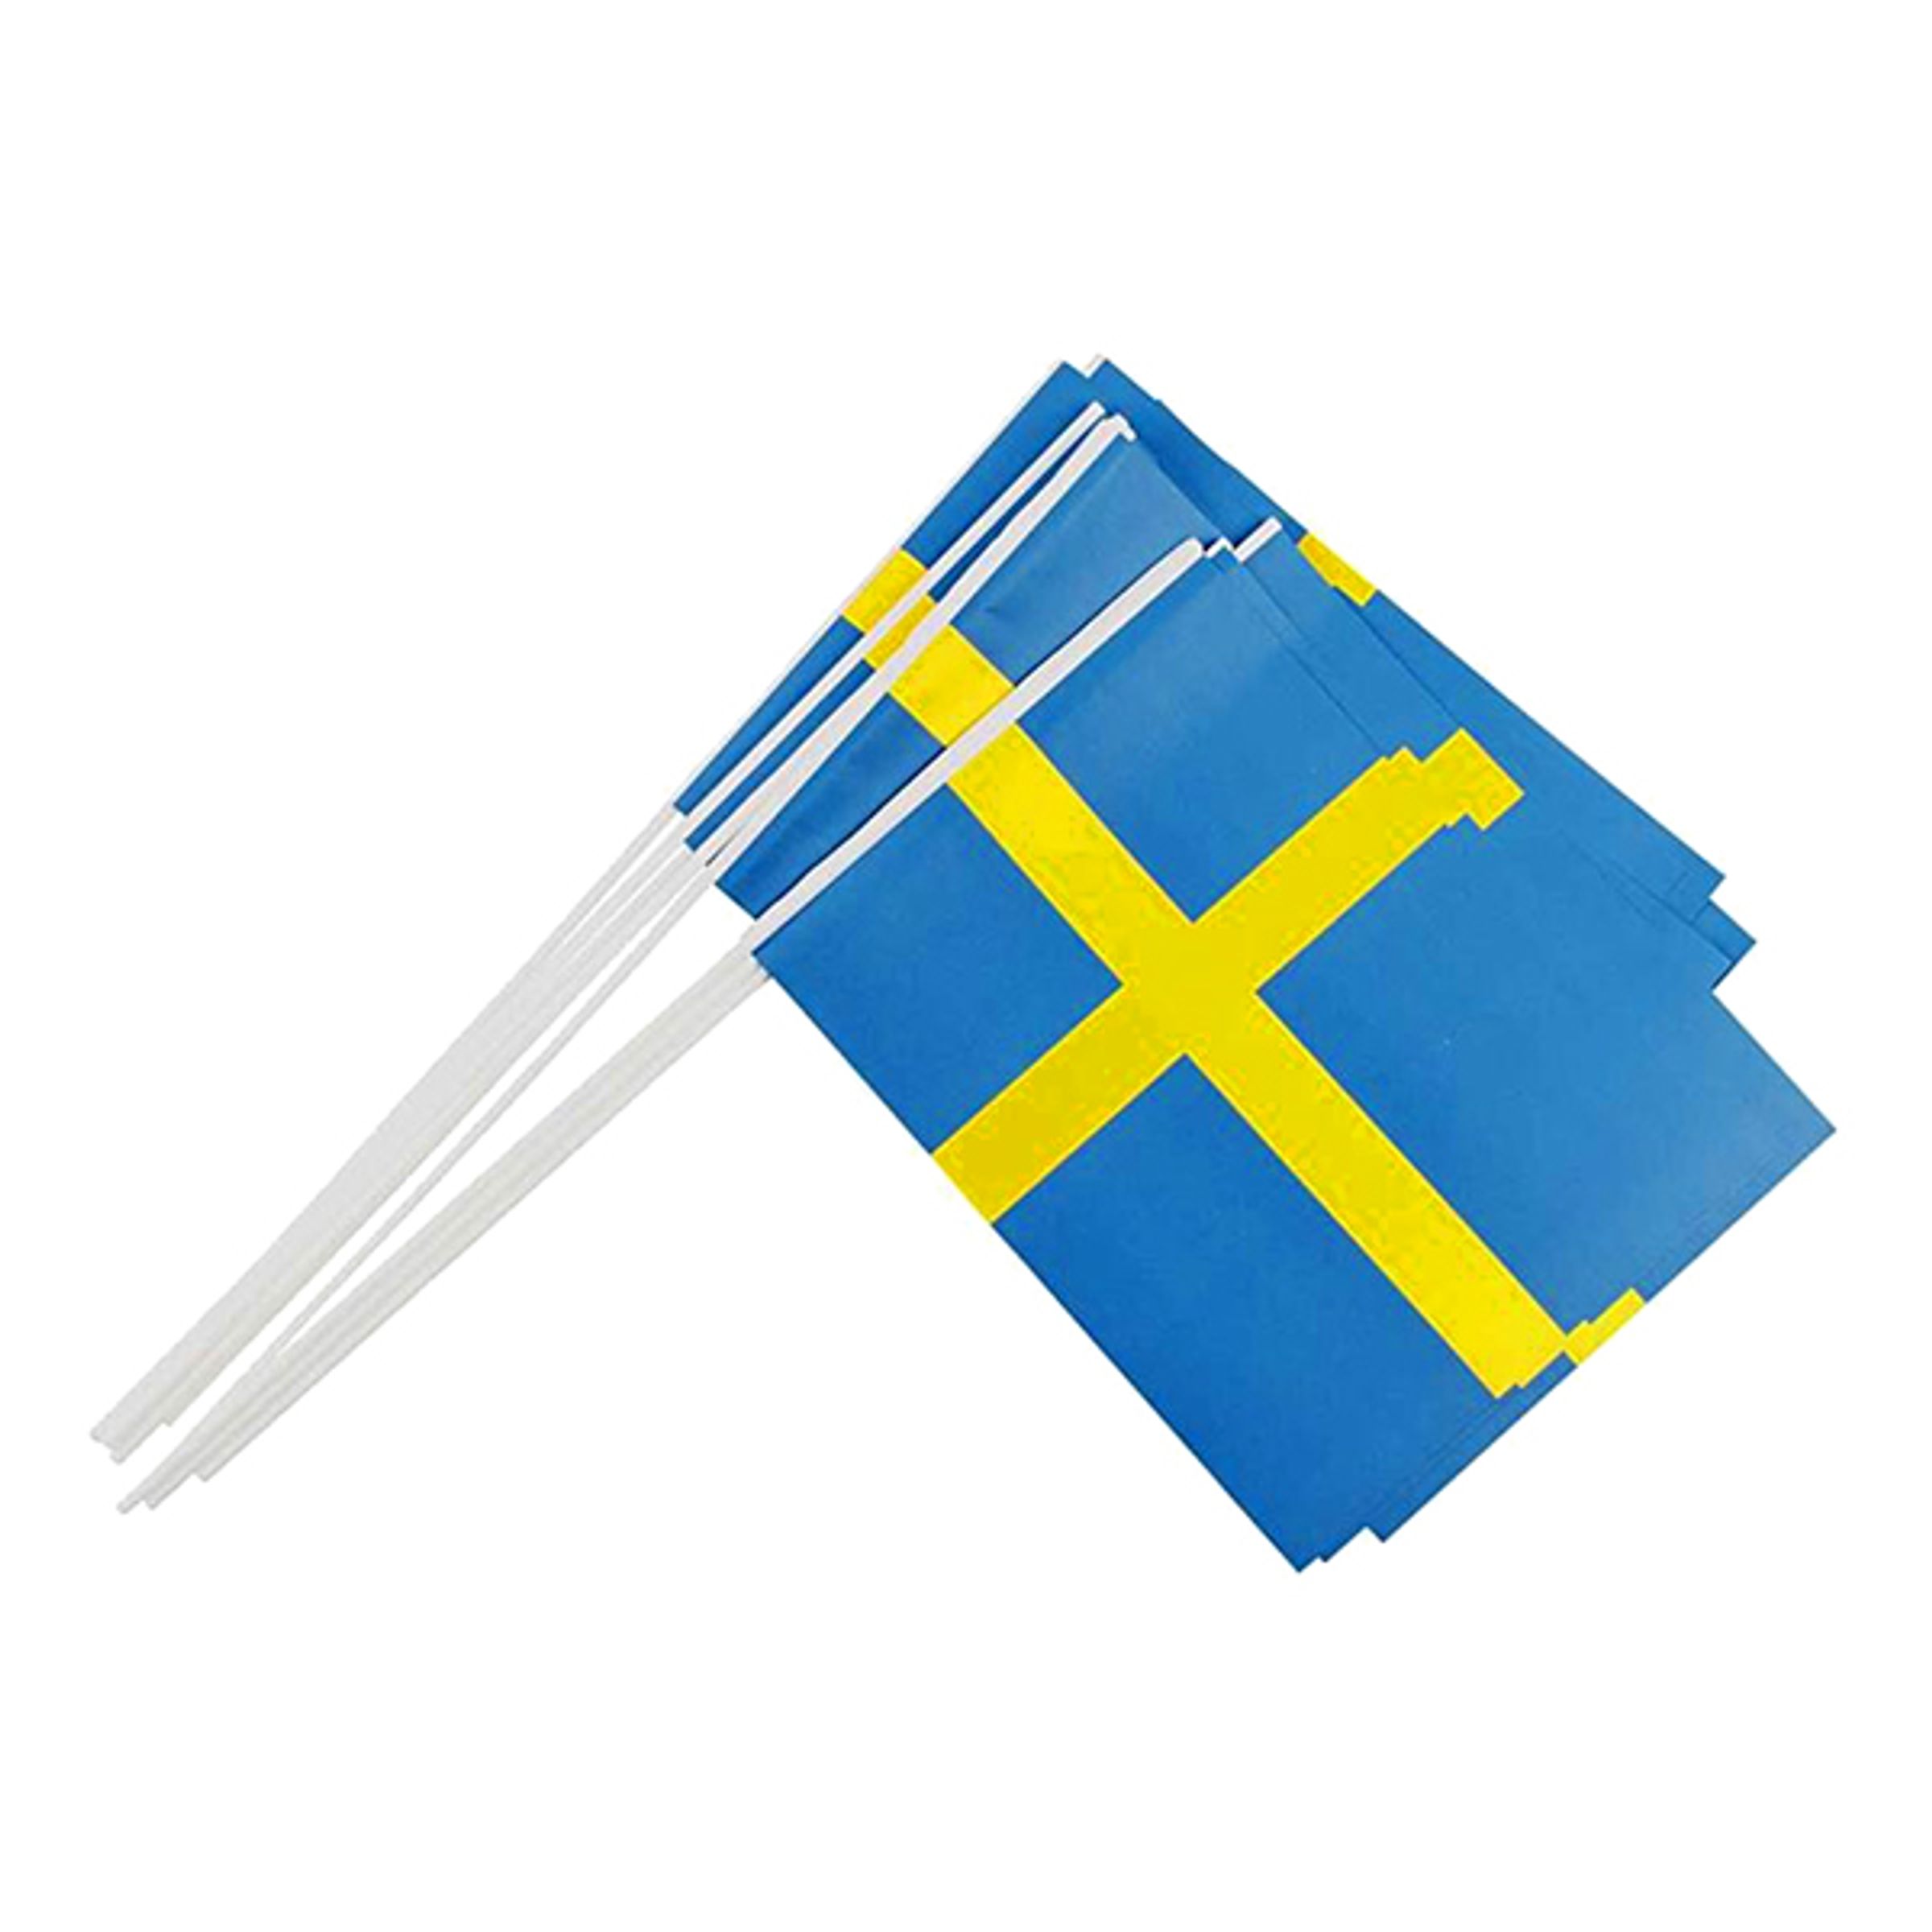 Pappersflaggor Sverige - 10-pack